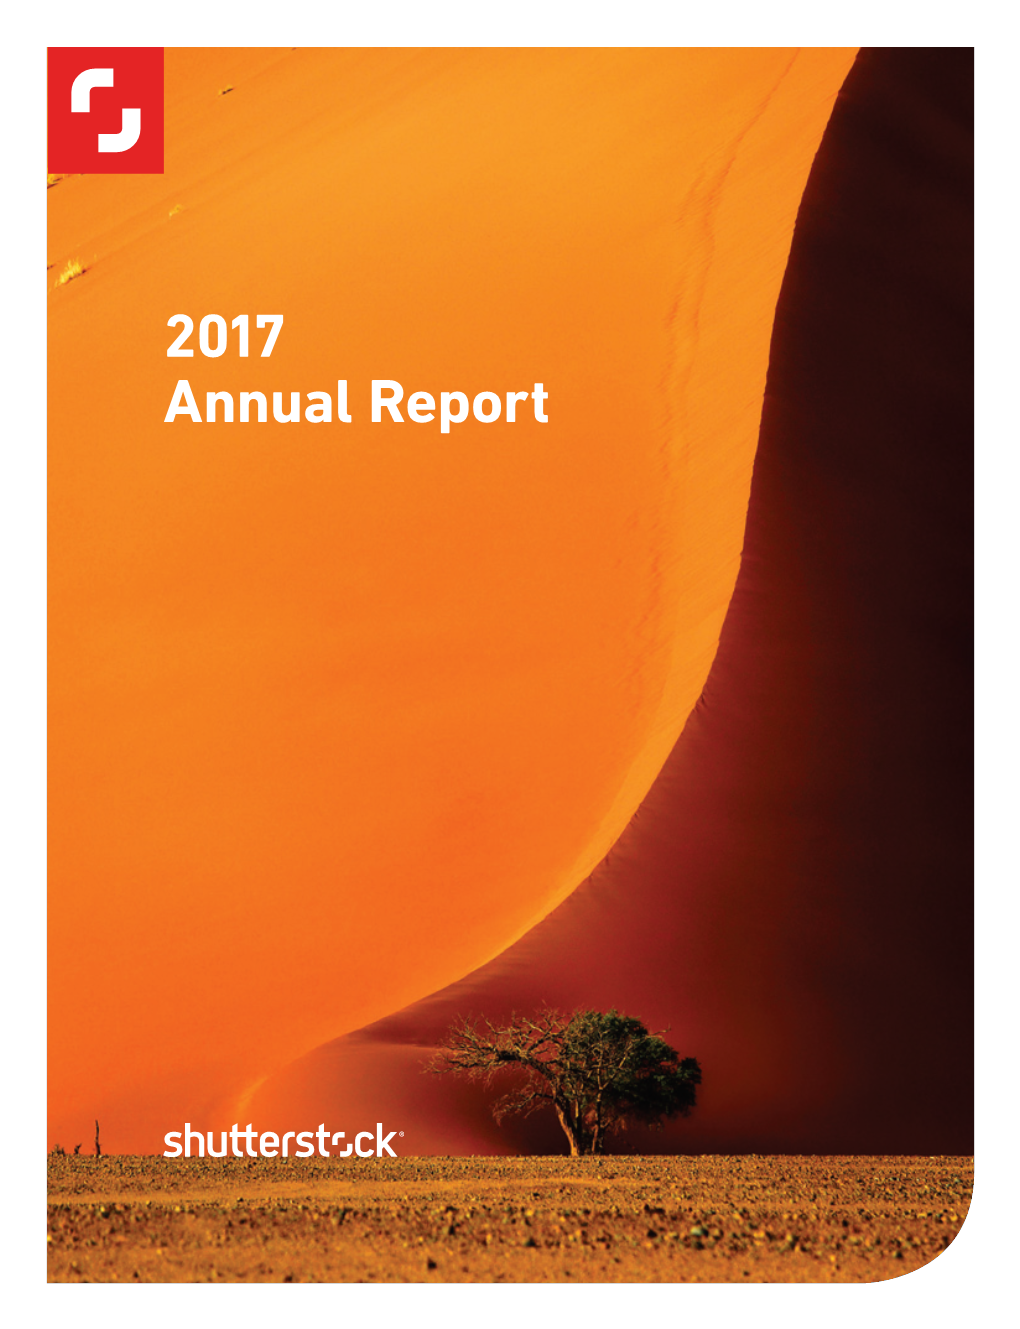 Shutterstock, Inc. 2017 Annual Report